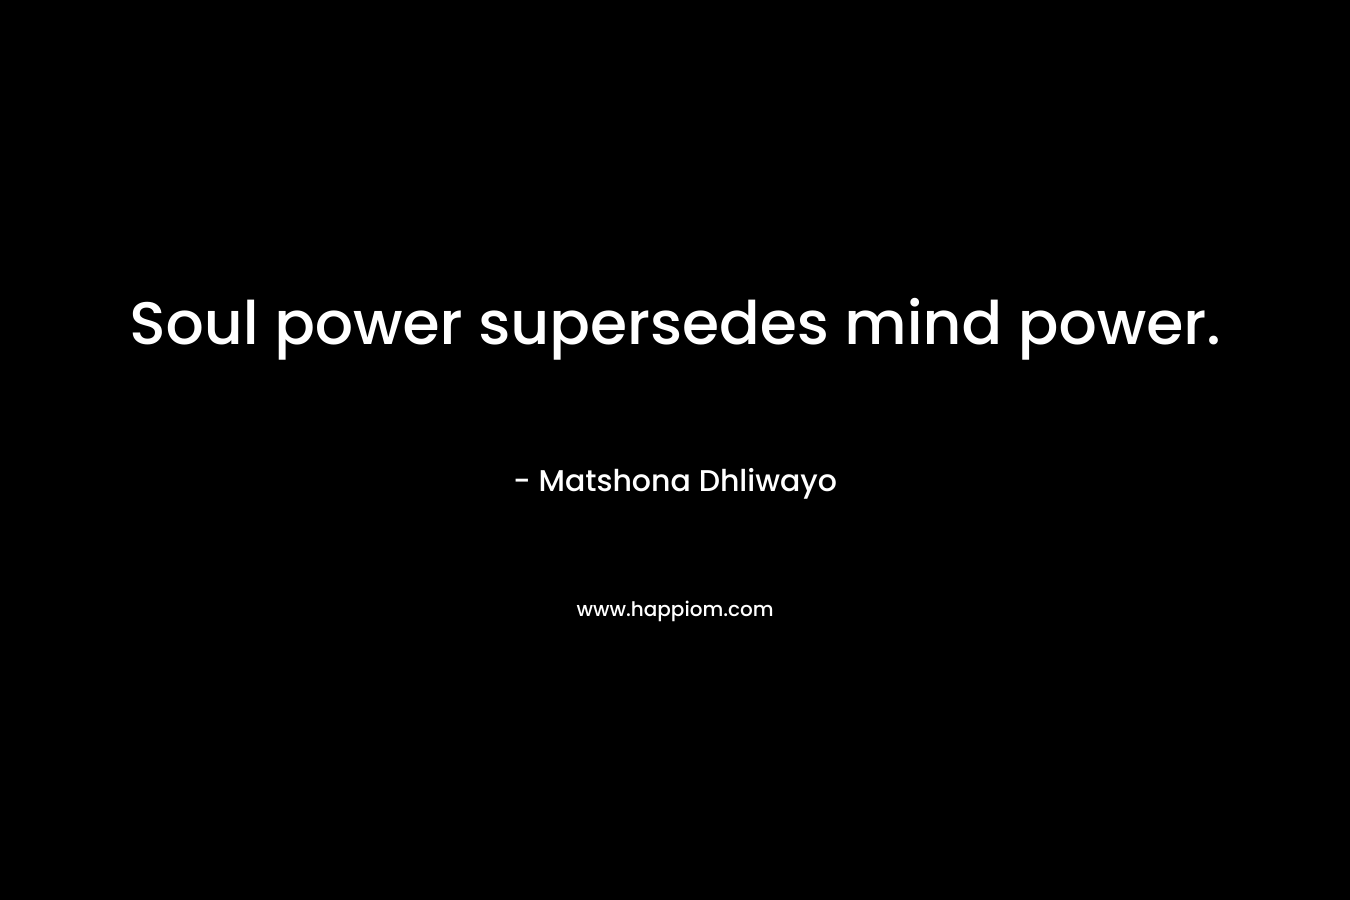 Soul power supersedes mind power.